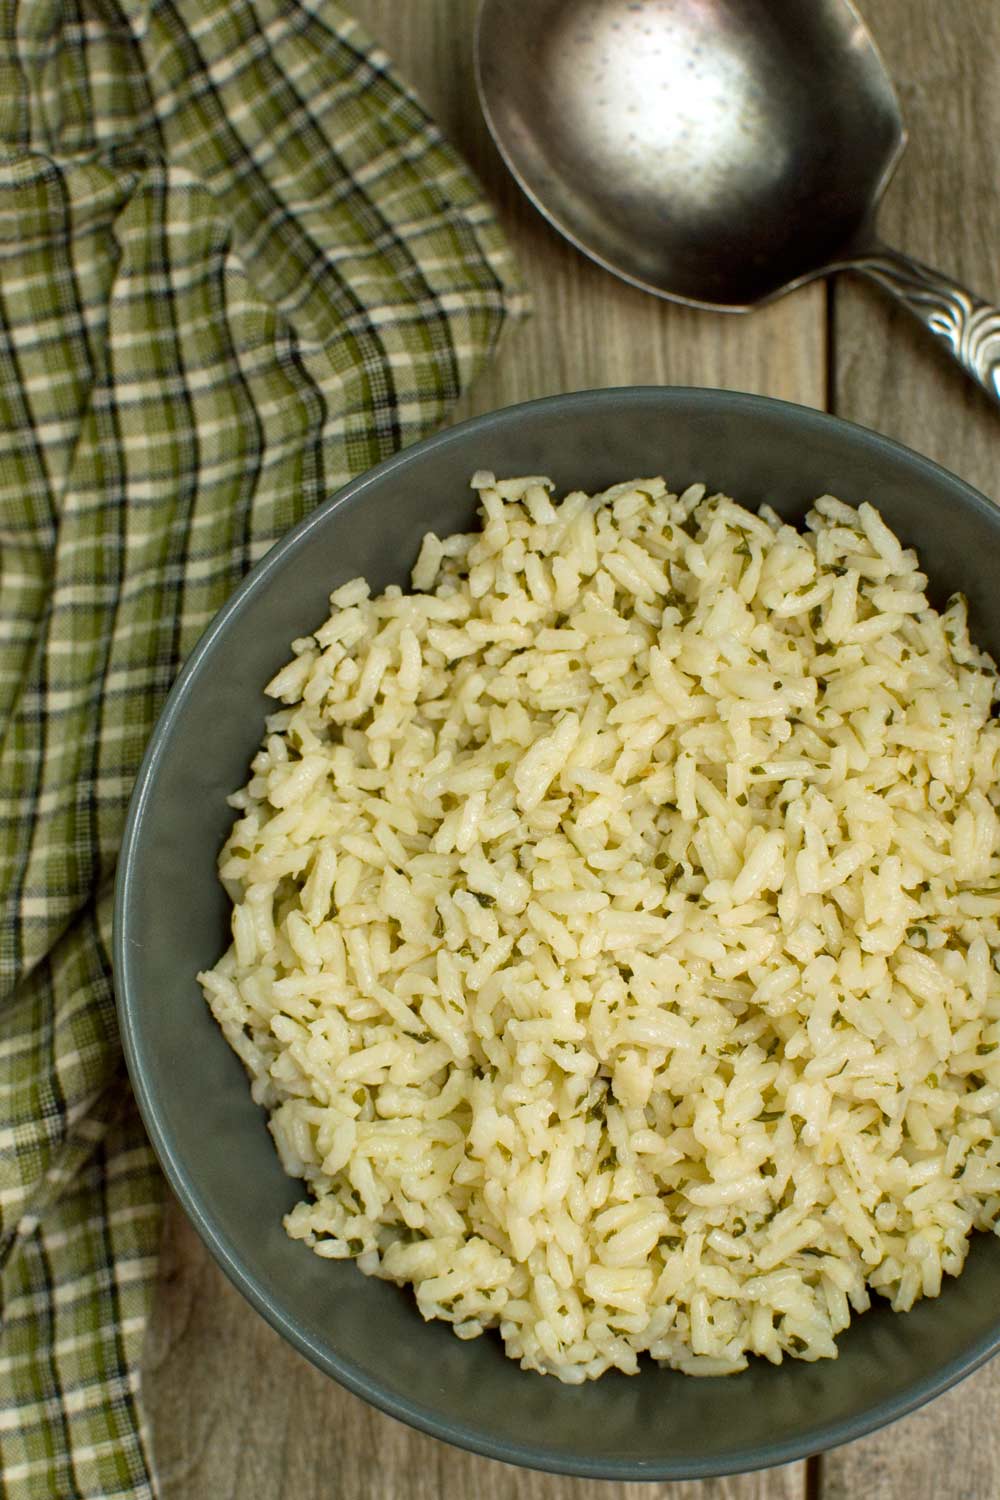 Microwave Long-Grain Rice